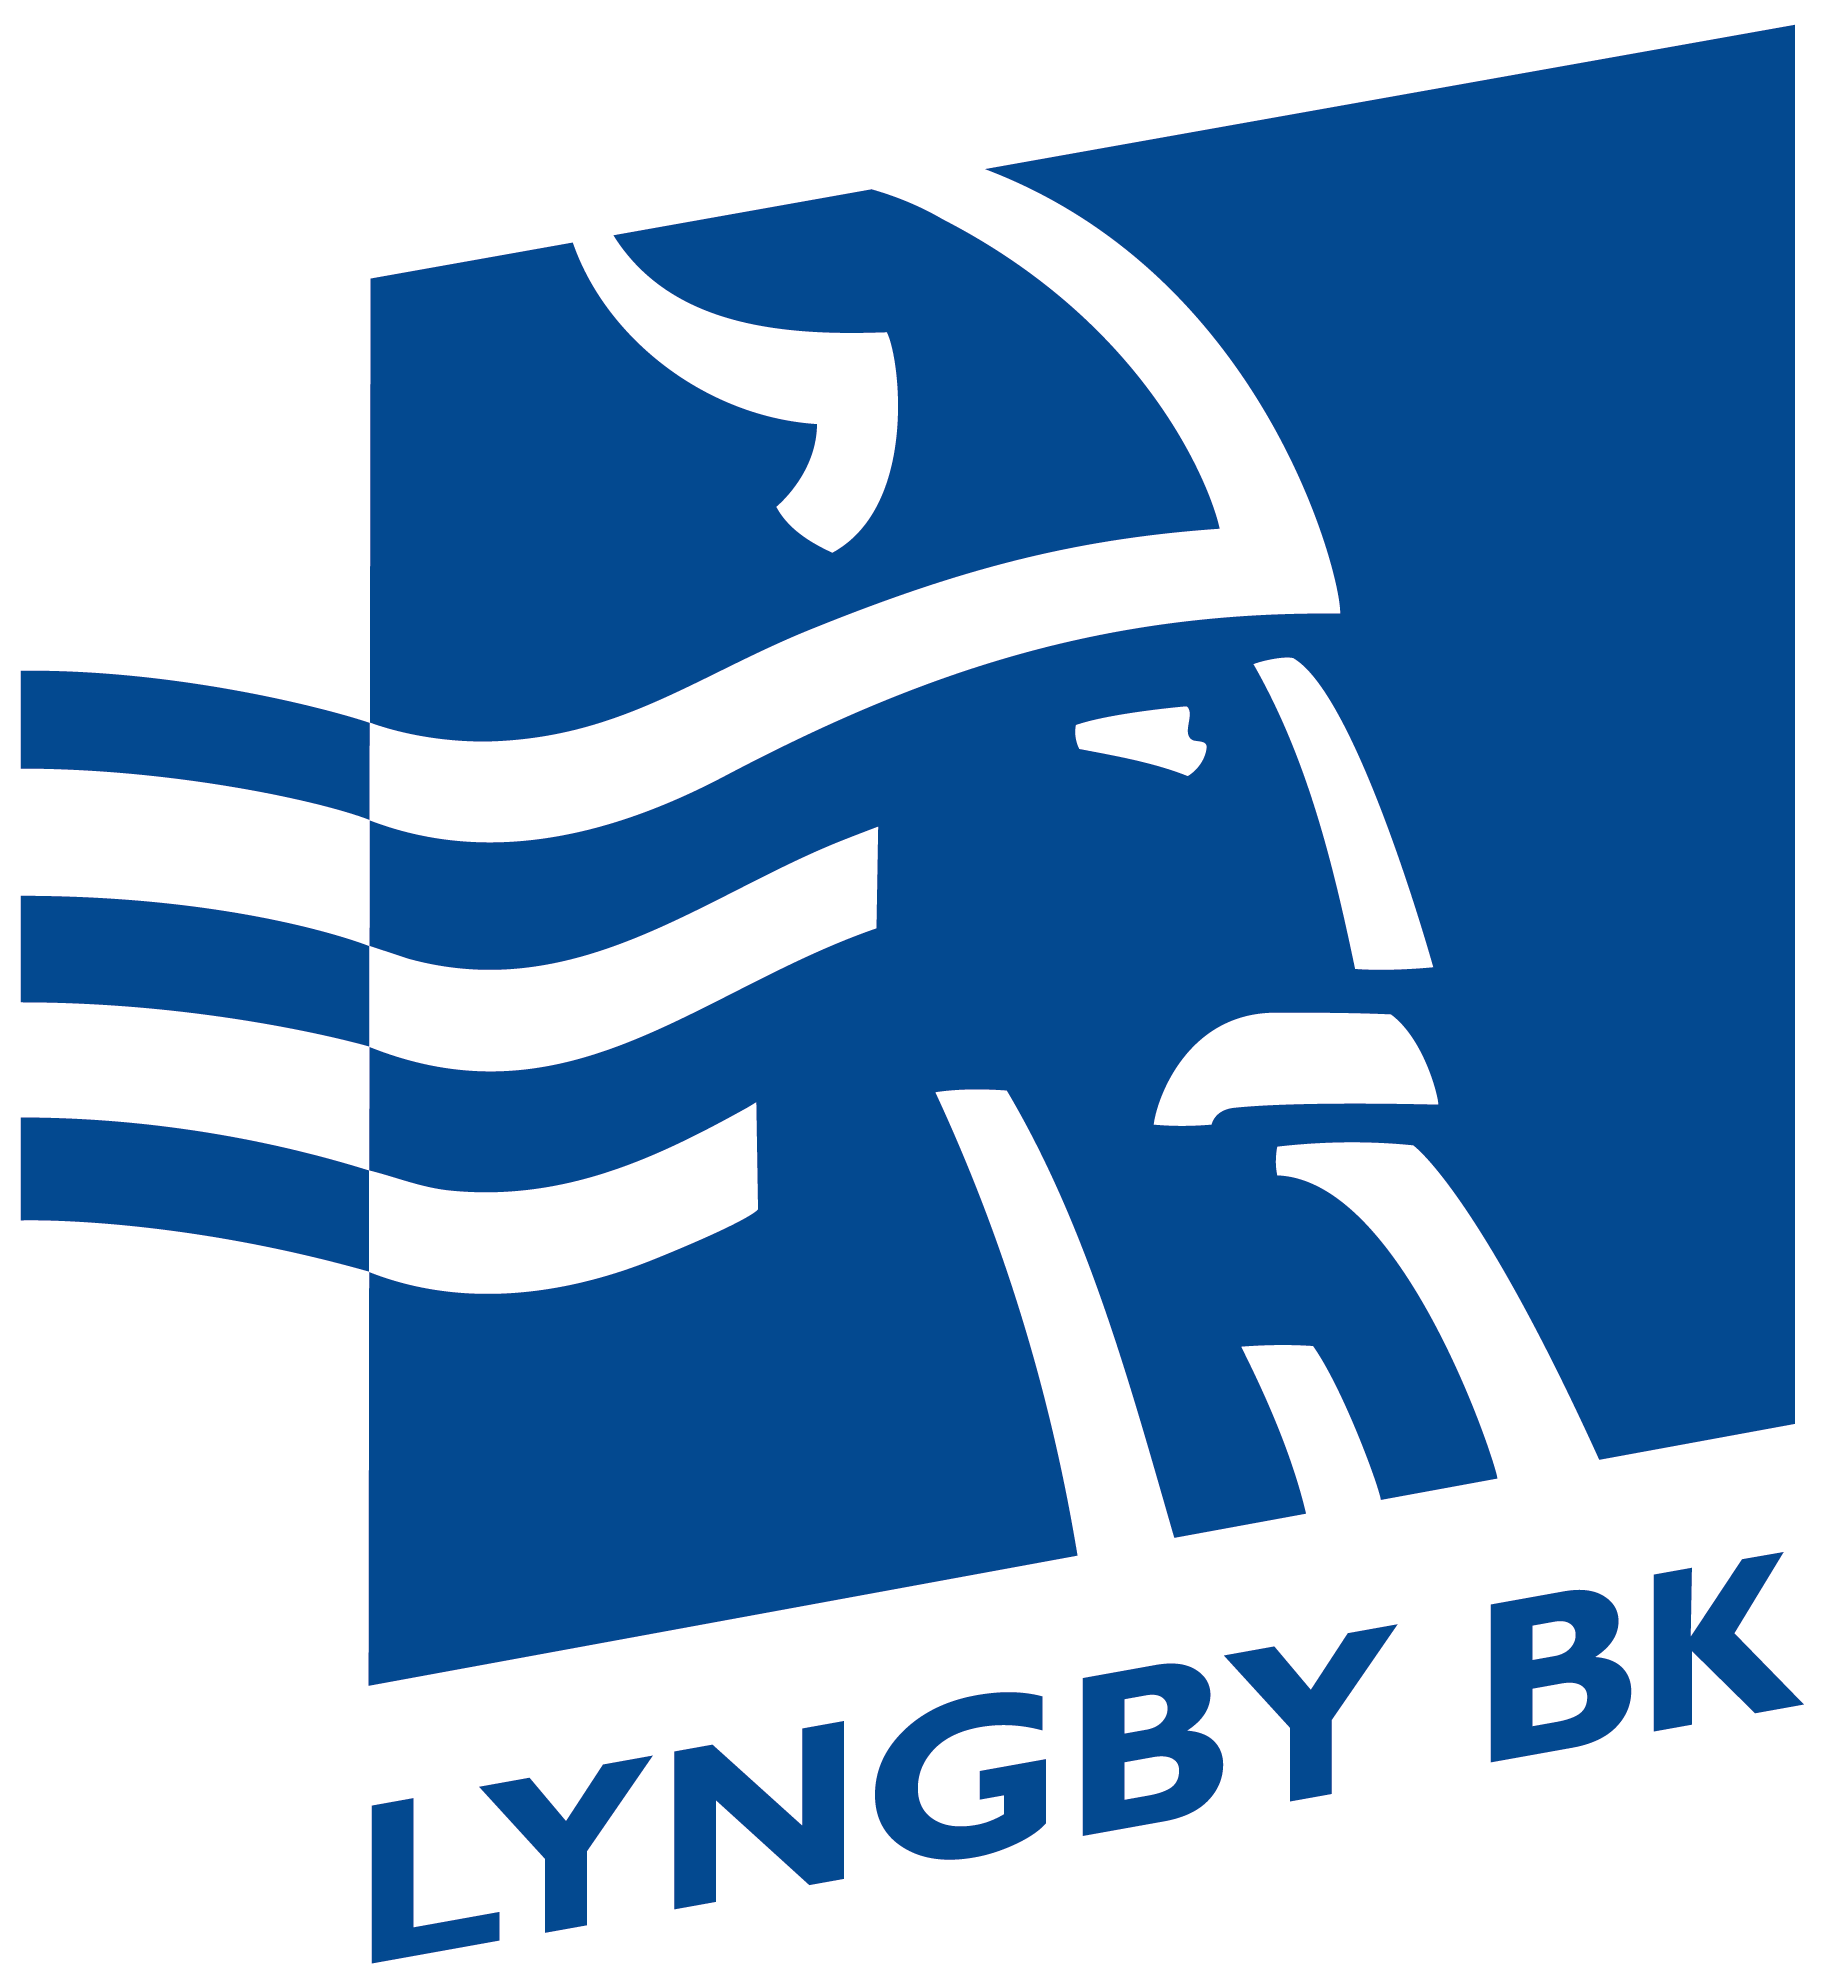 Lyngby BK logo-20